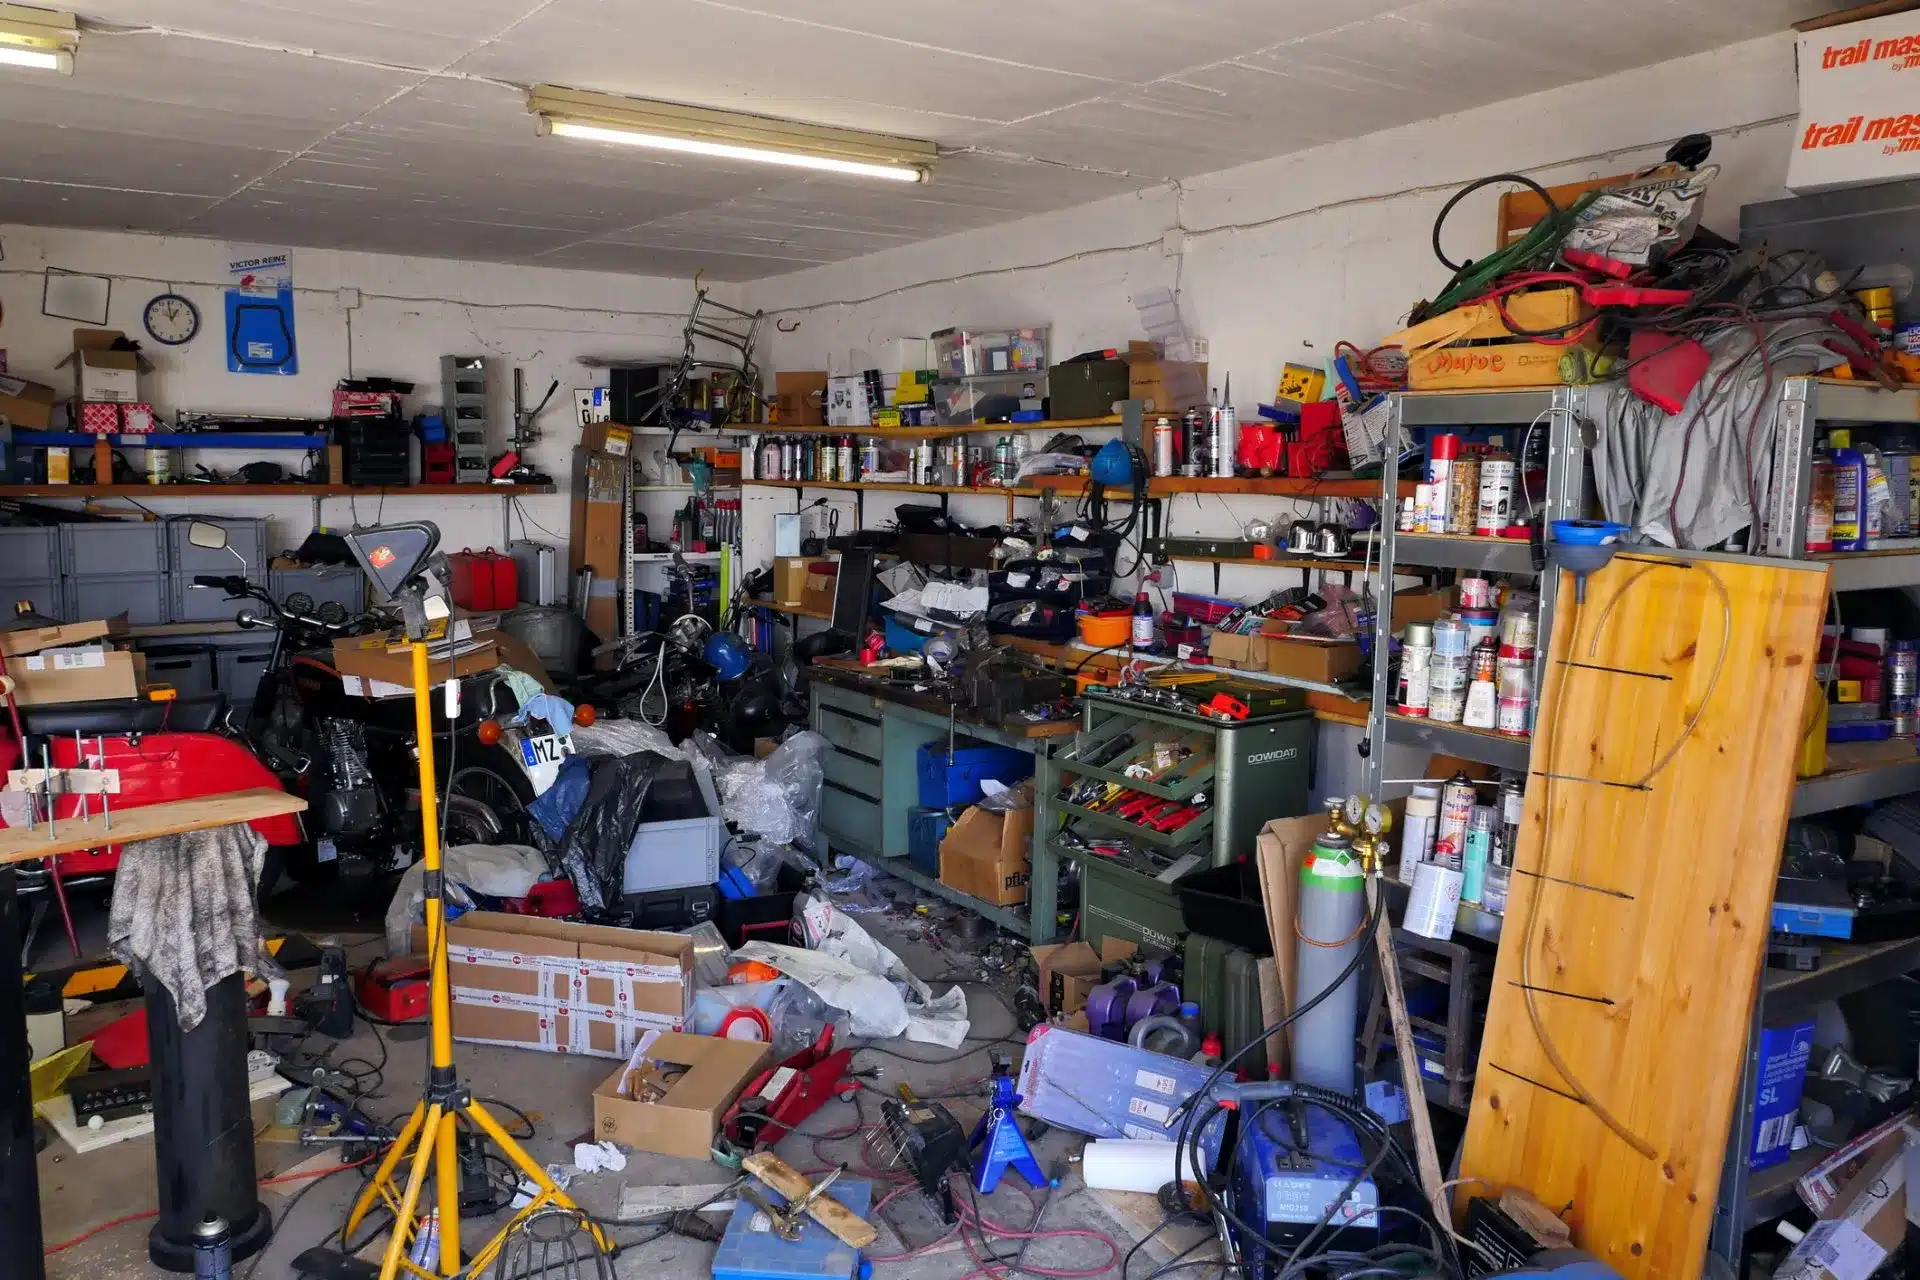 Garage full of clutter.